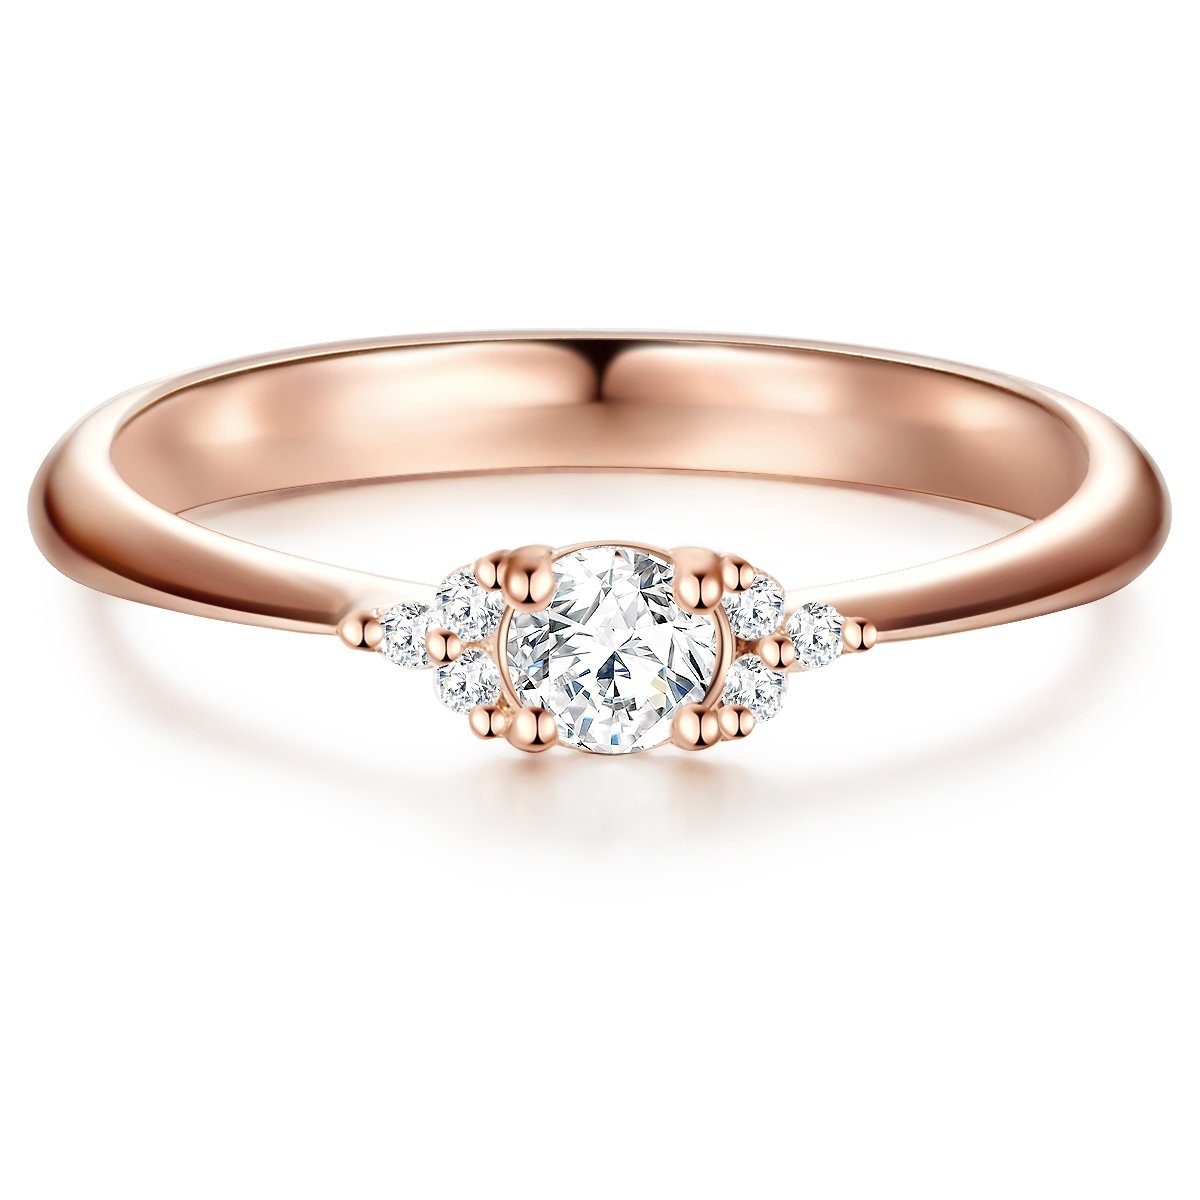 Trilani Fingerring Damen-Ring aus Sterling Silber, in rosévergoldet, mit Zirkonia